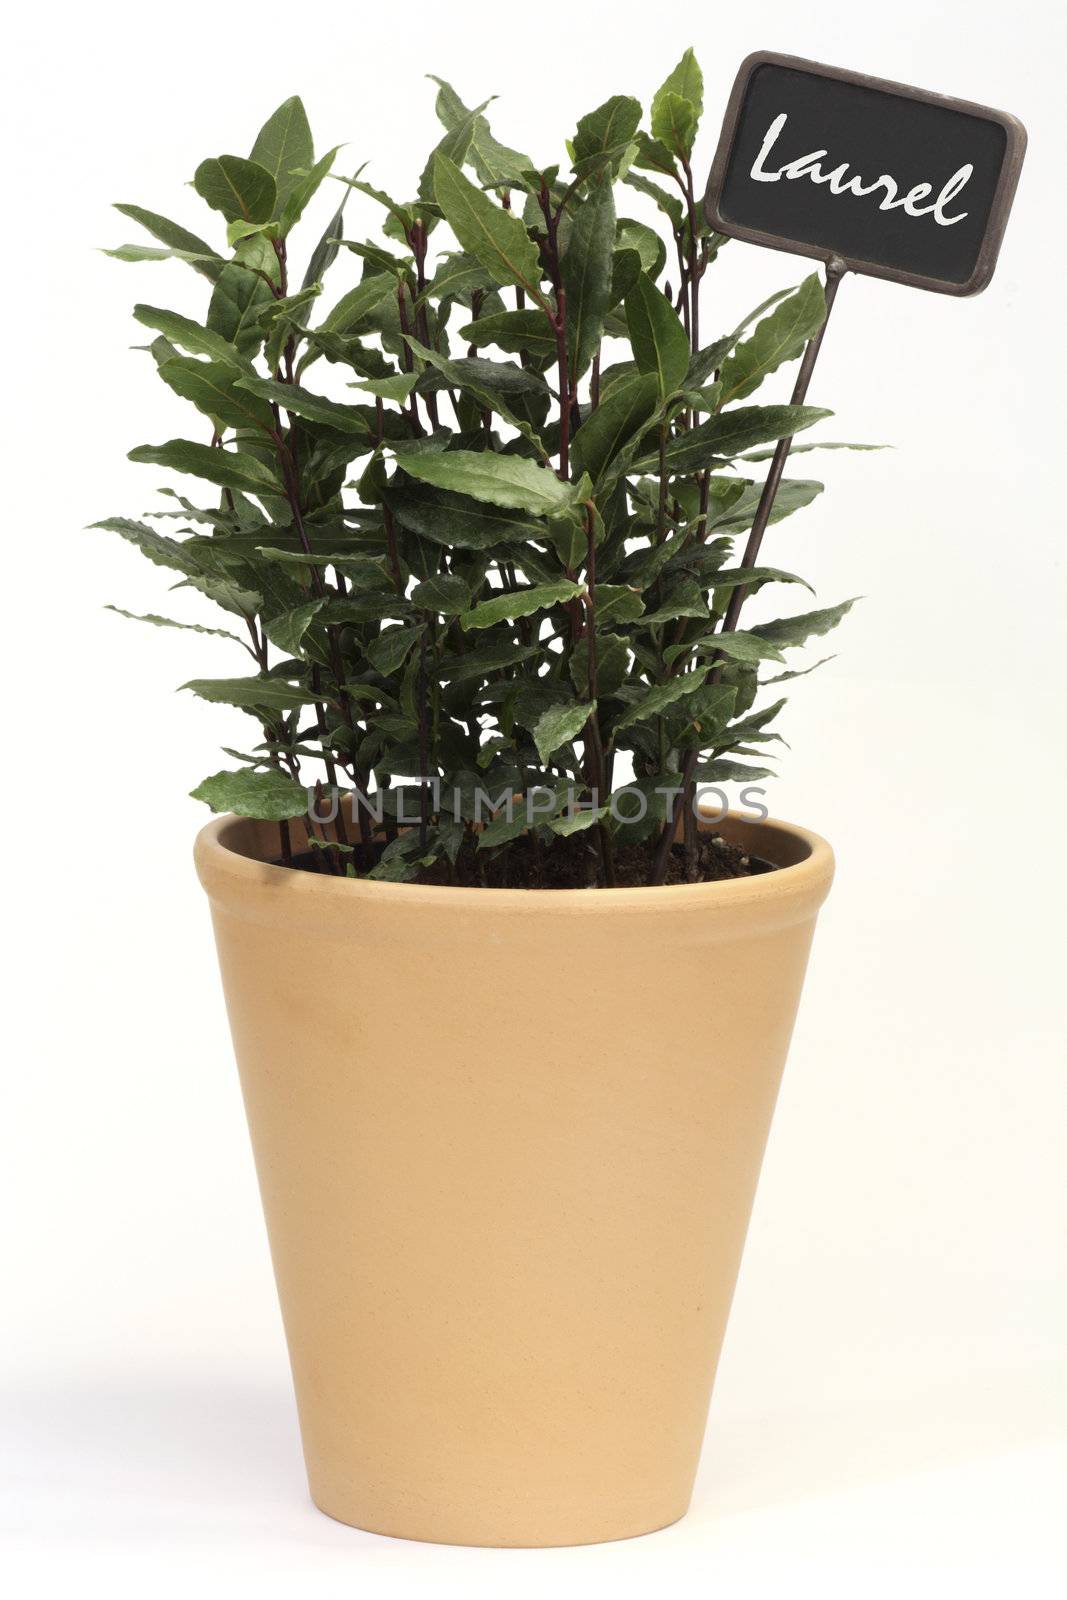 Laurel bush in a flowerpot with label